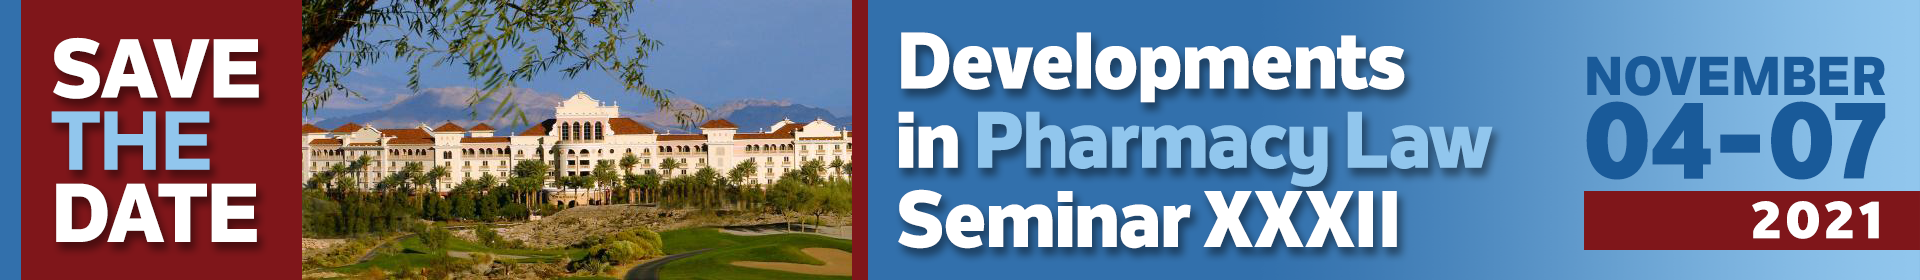 ASPL Developments in Pharmacy Law Seminar XXXII Event Banner